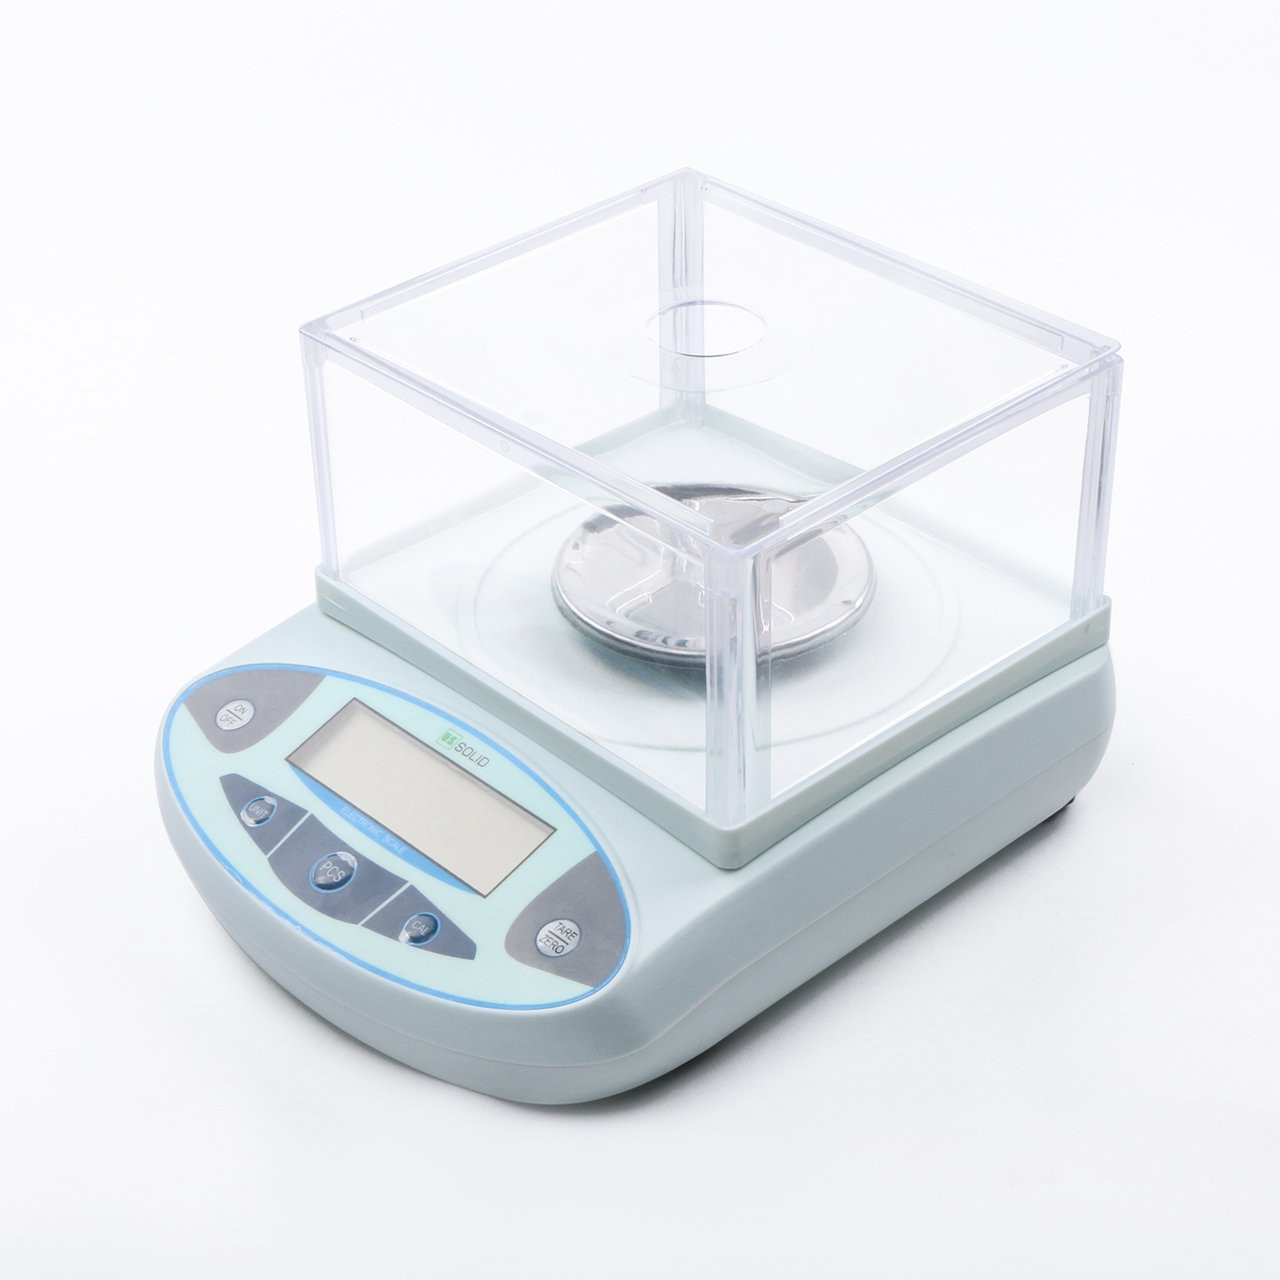 U.S. Solid 0.001 g Precision Balance – Digital Lab Scale 1 mg